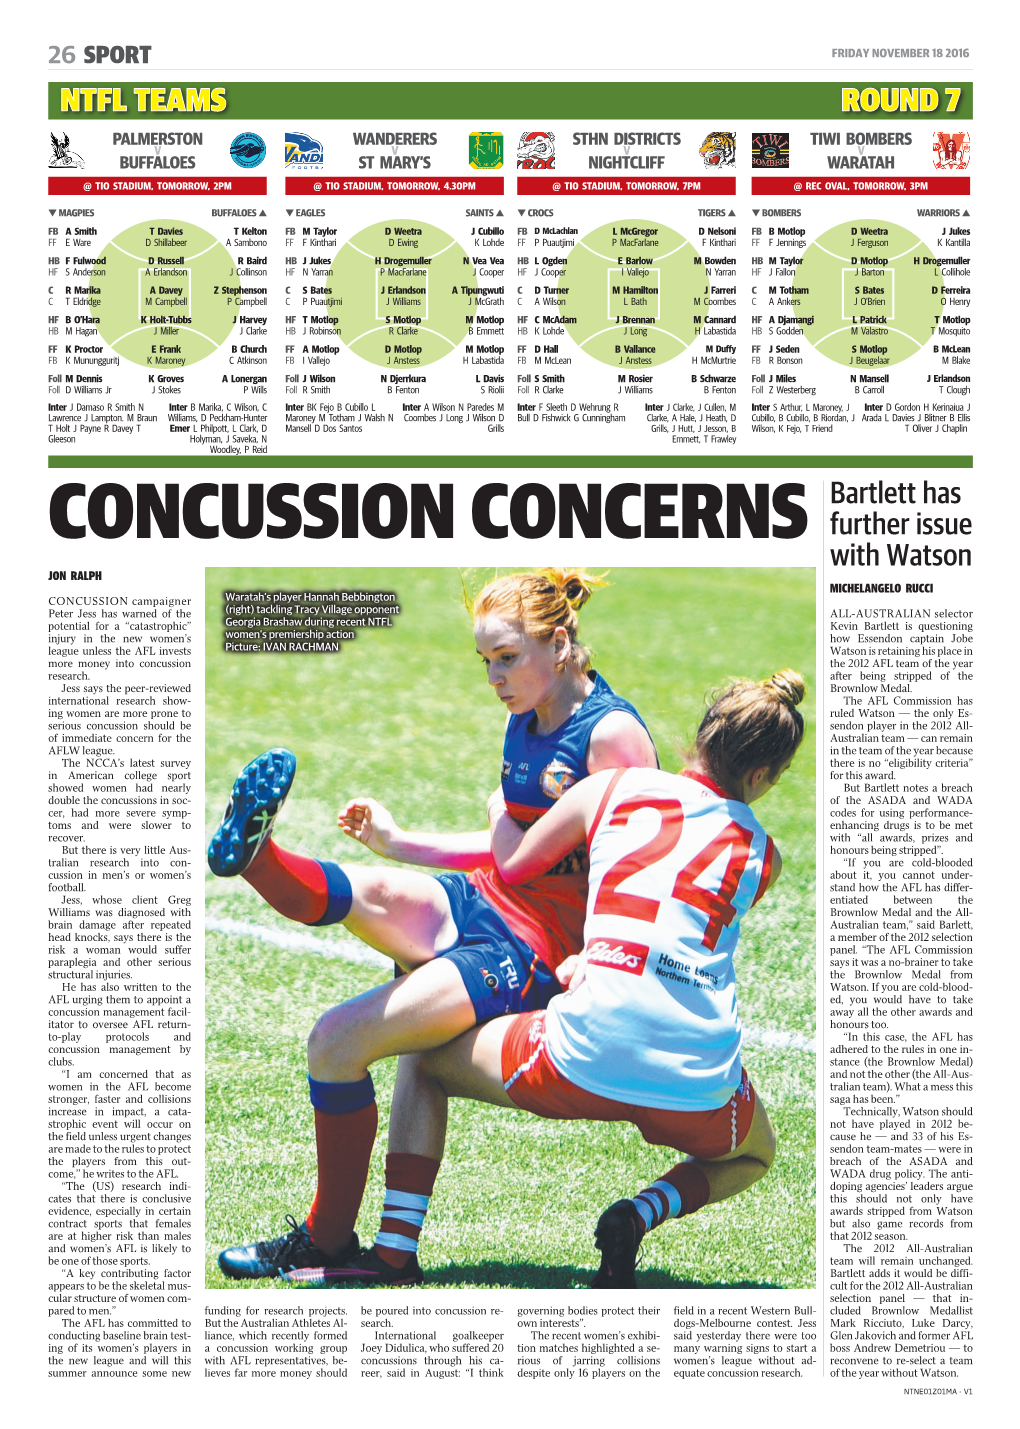 Concussion Concerns